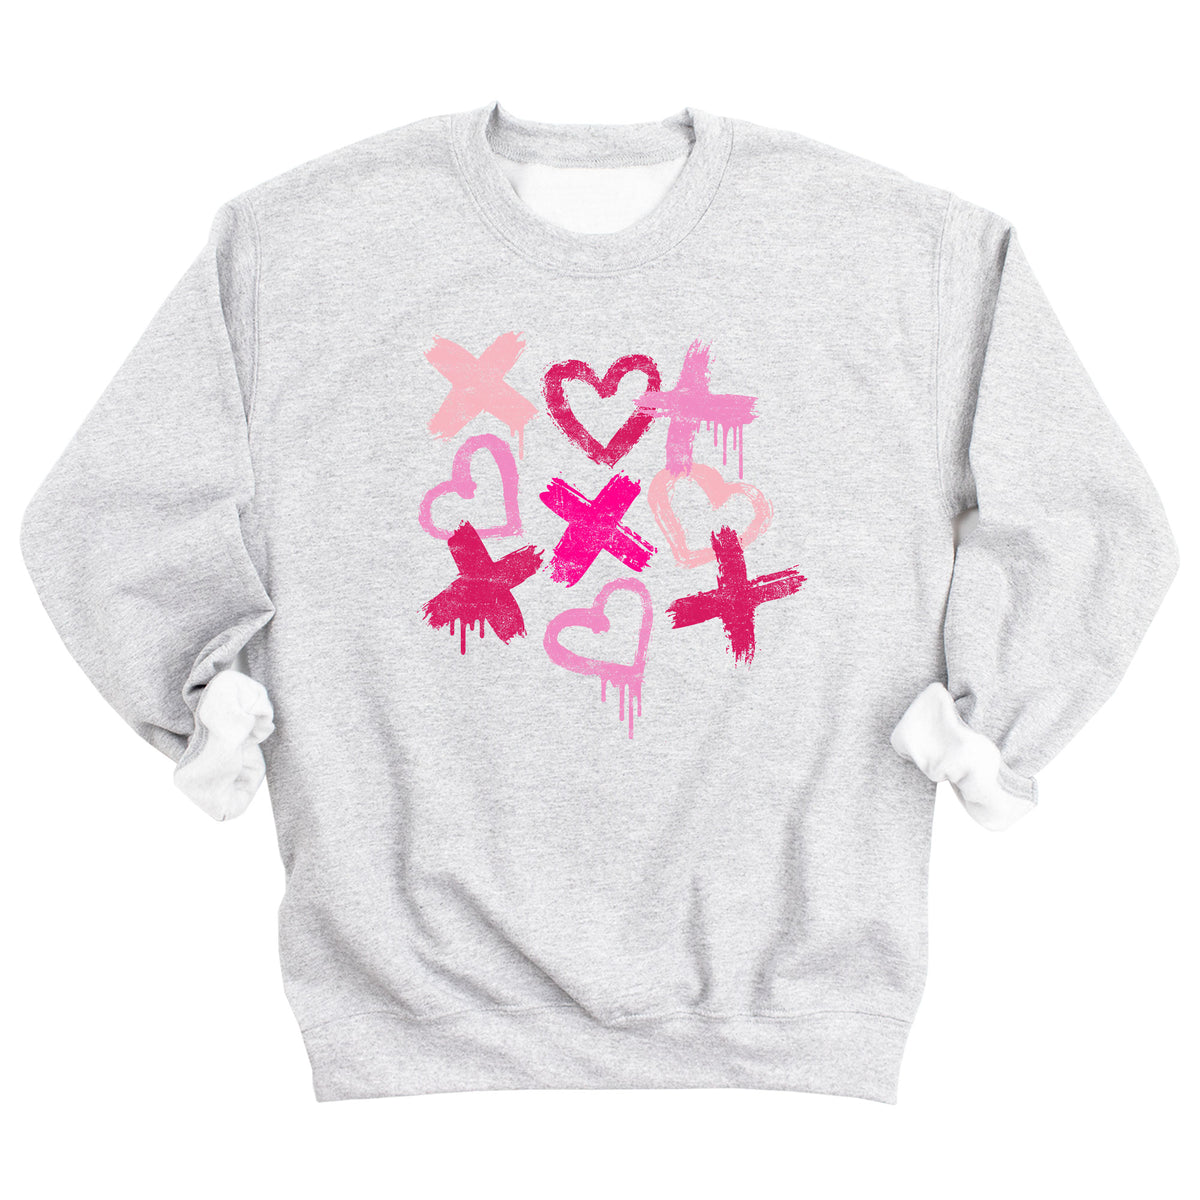 XO Hearts Paint Splatter Sweatshirt